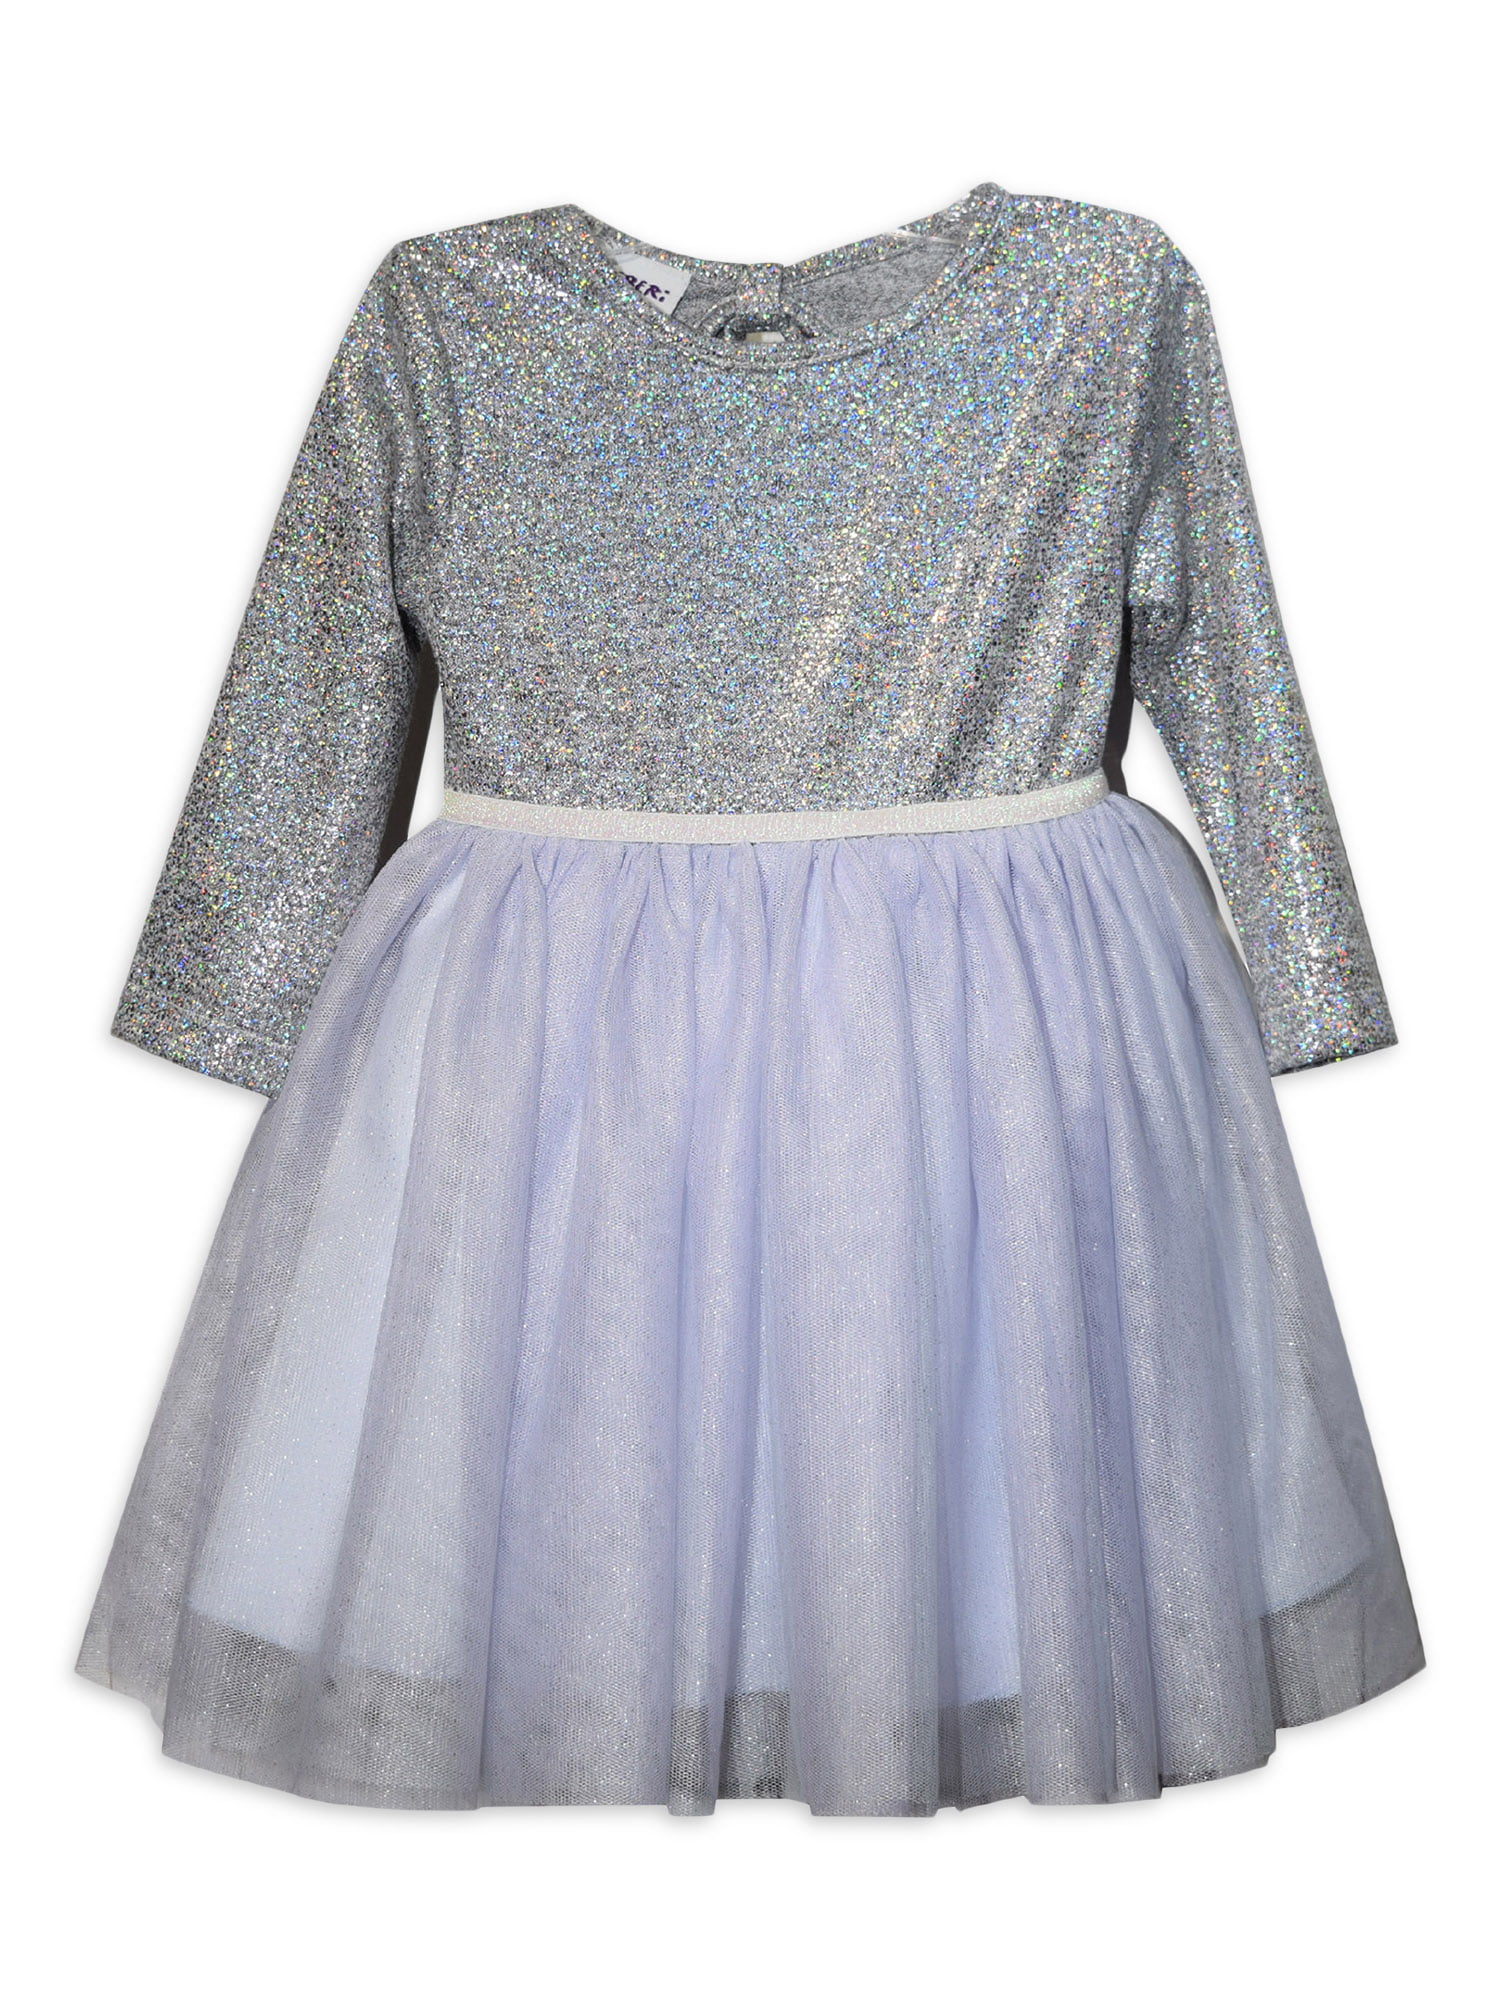 8 Toddler & Girls Blueberi Boulevard Assorted Party Dresses Size 2T 